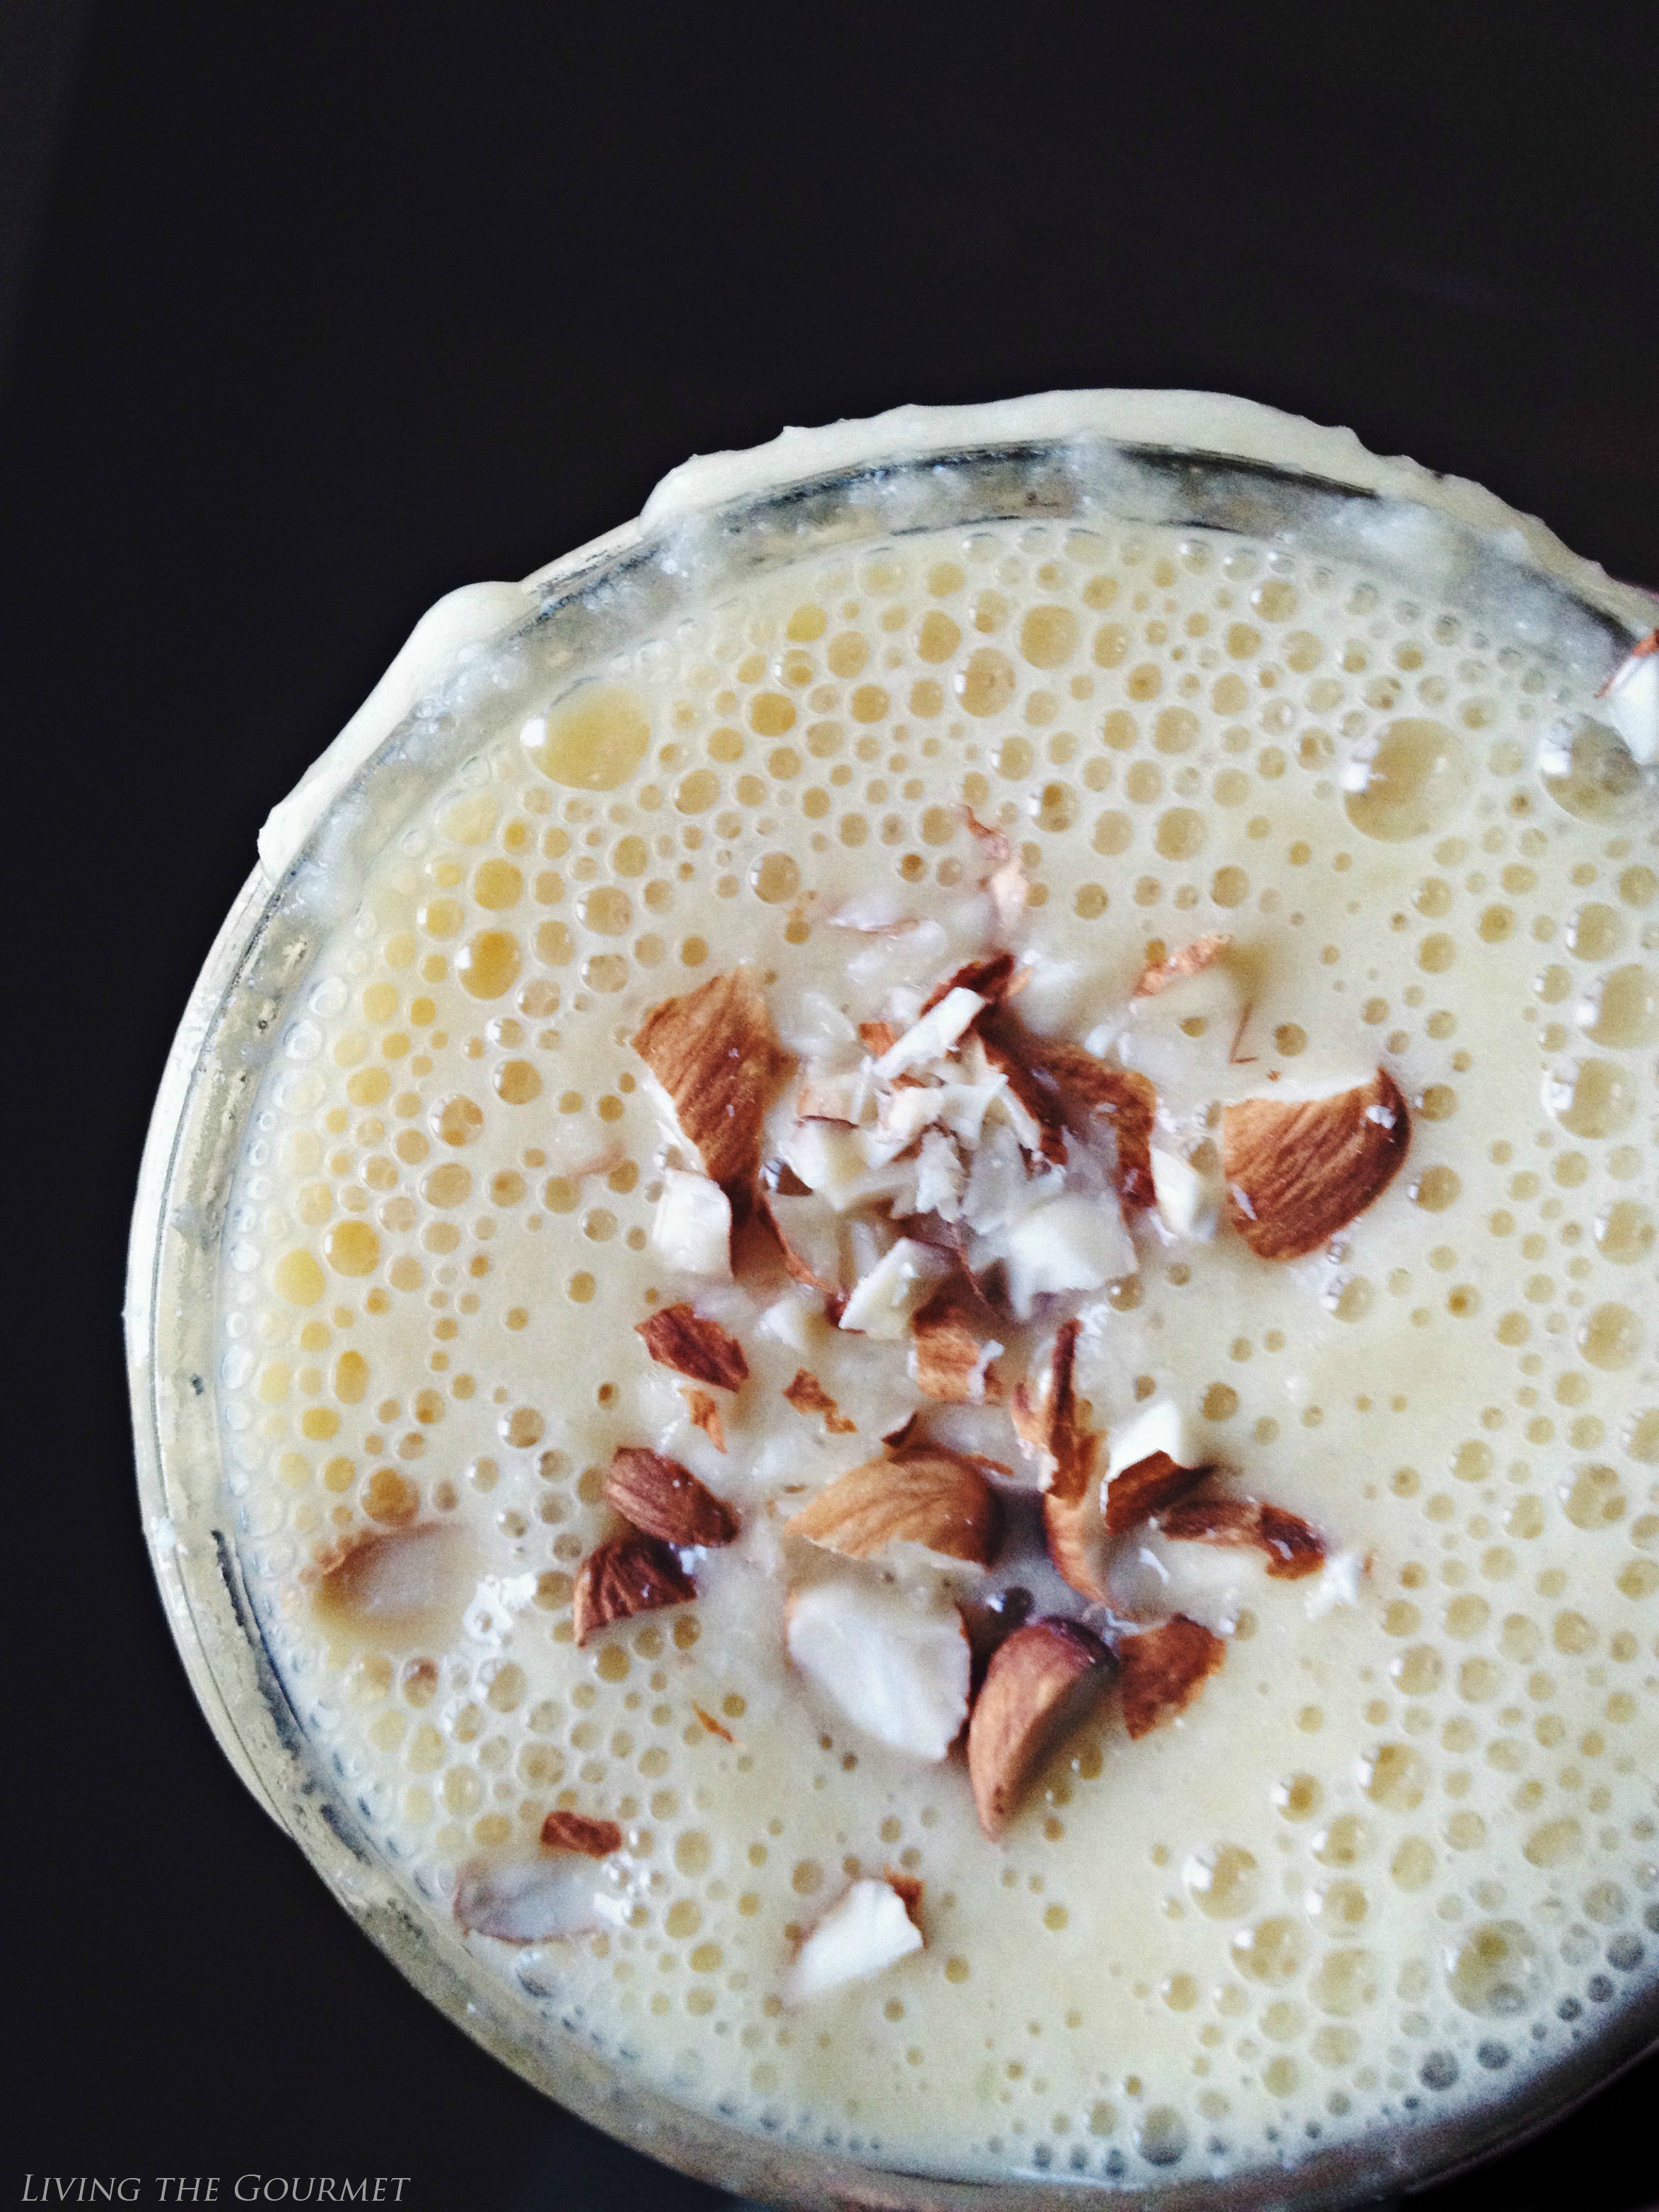 Living the Gourmet: Blue Diamond Almond Milk Tropical Smoothie